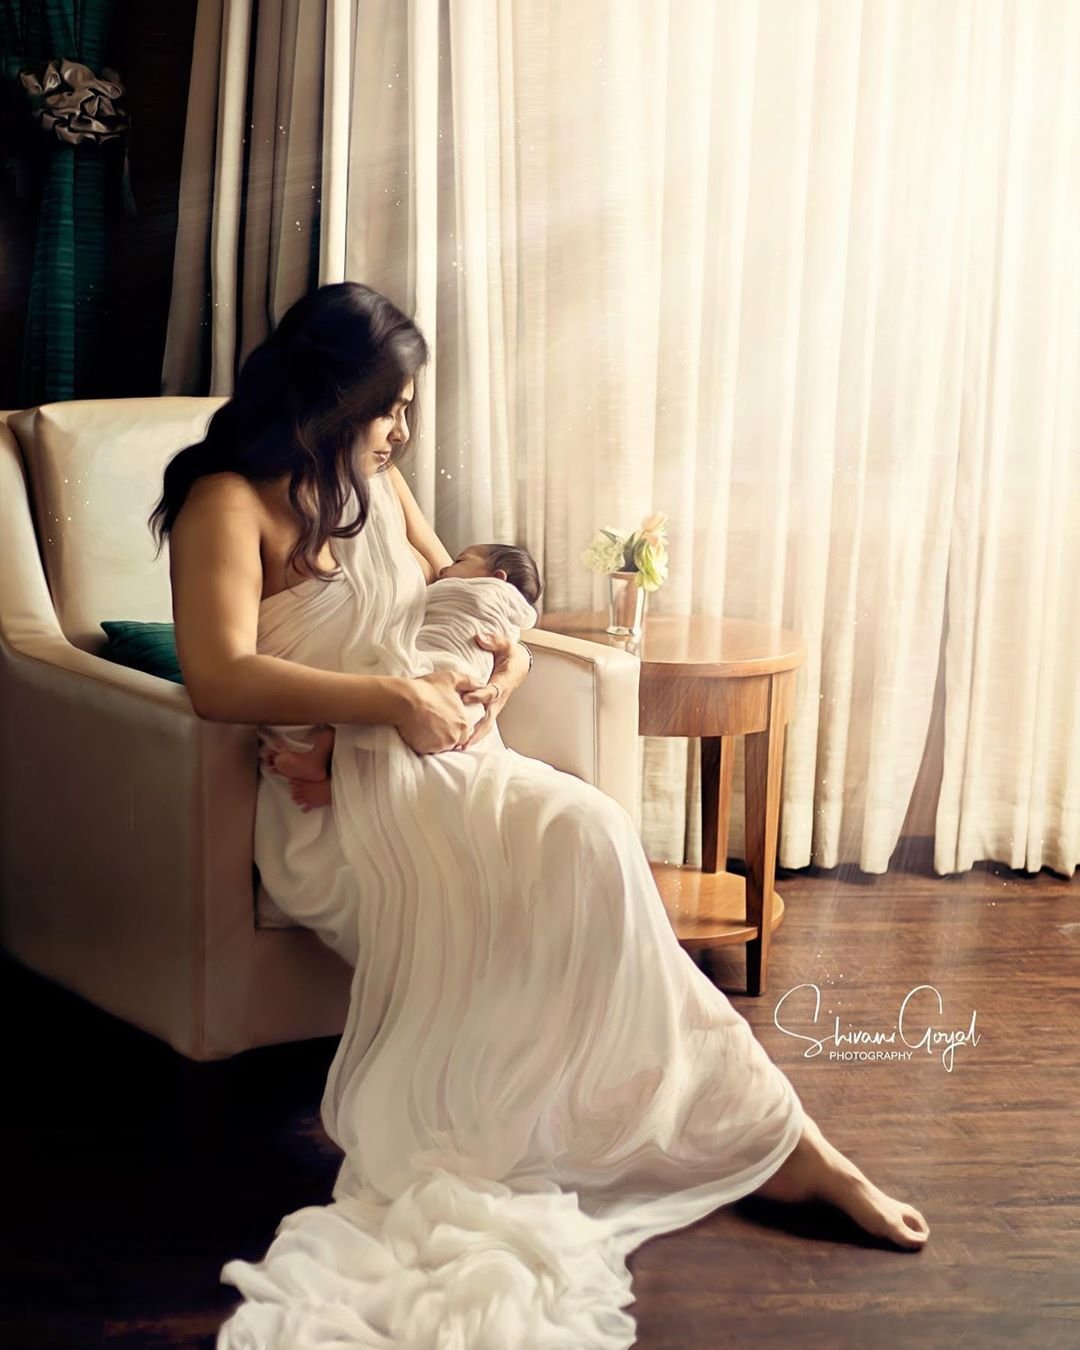 Maternity Photography | Maternity Photoshoot